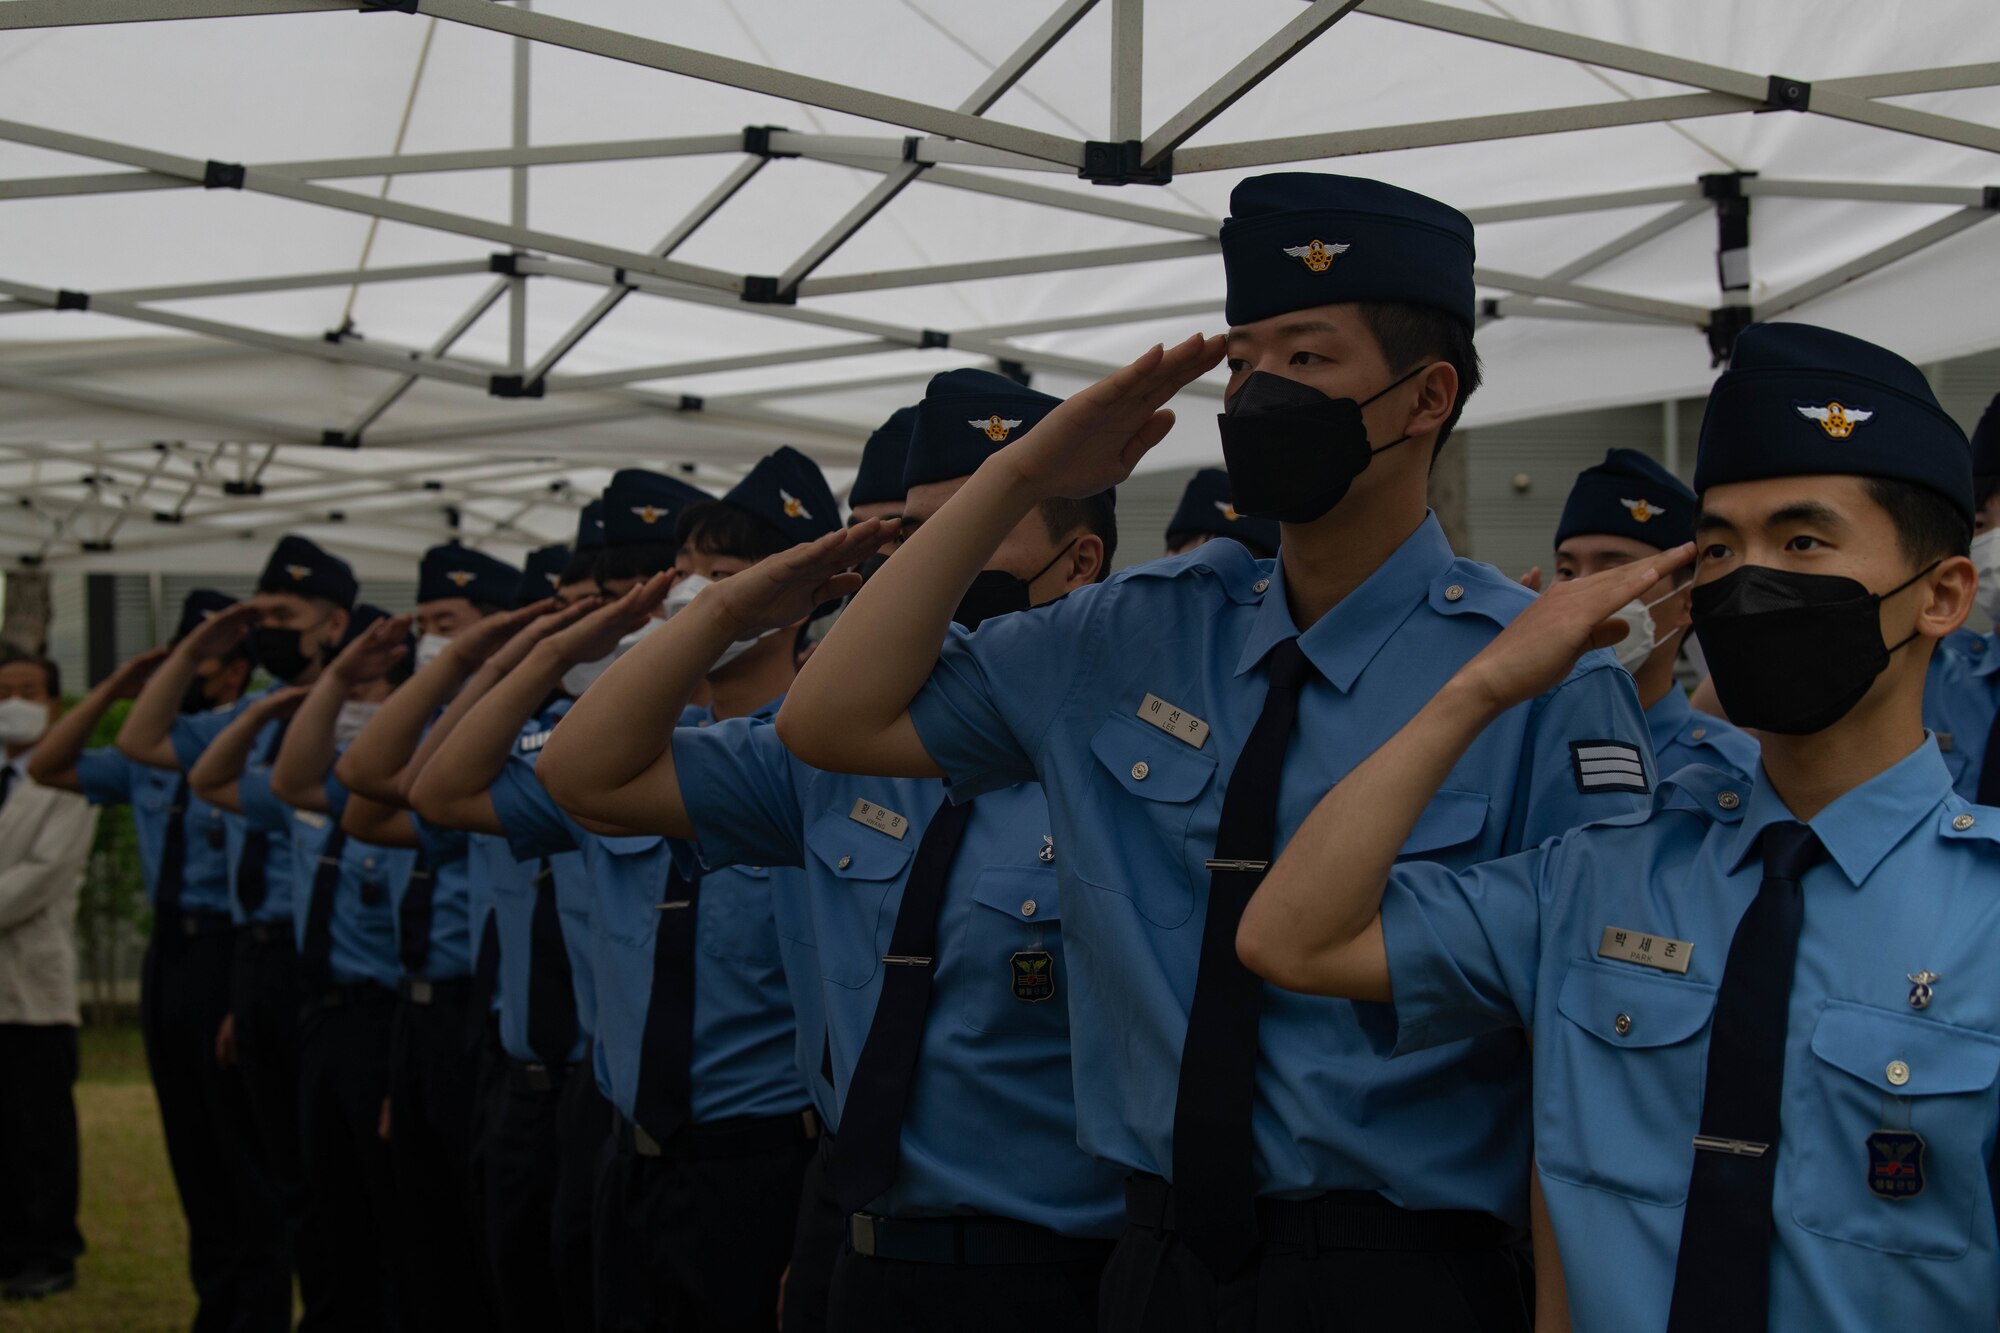 A row of military members saluting.